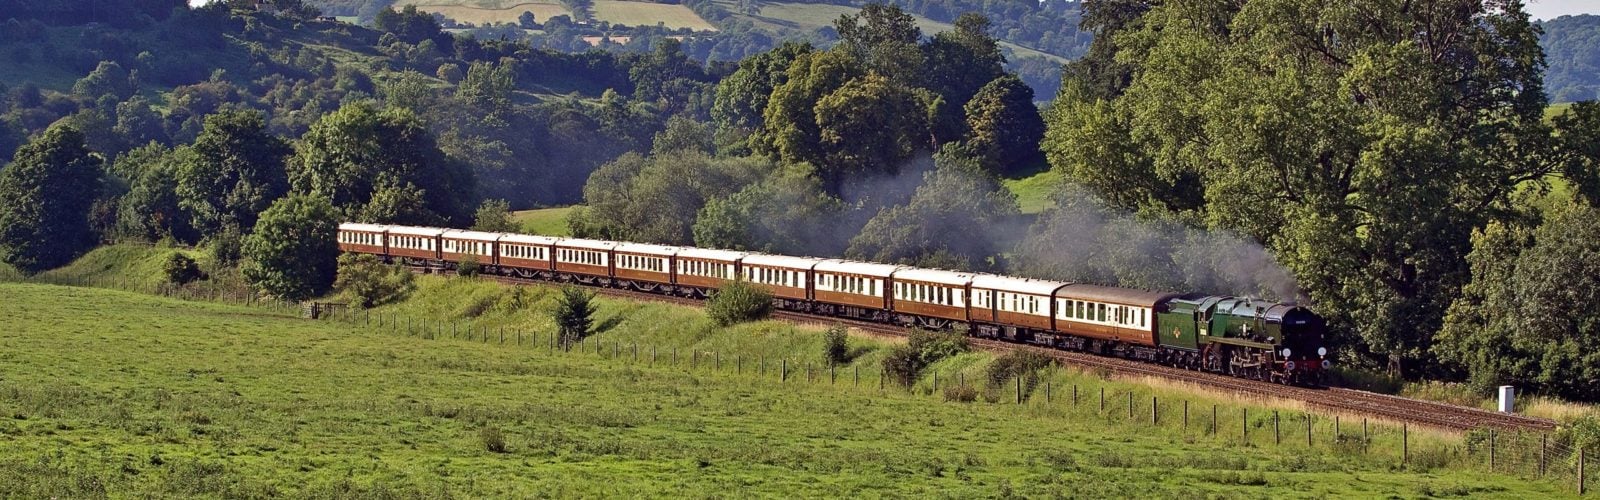 Belmond British Pullman - Luxury Train & Rail Travel in the UK